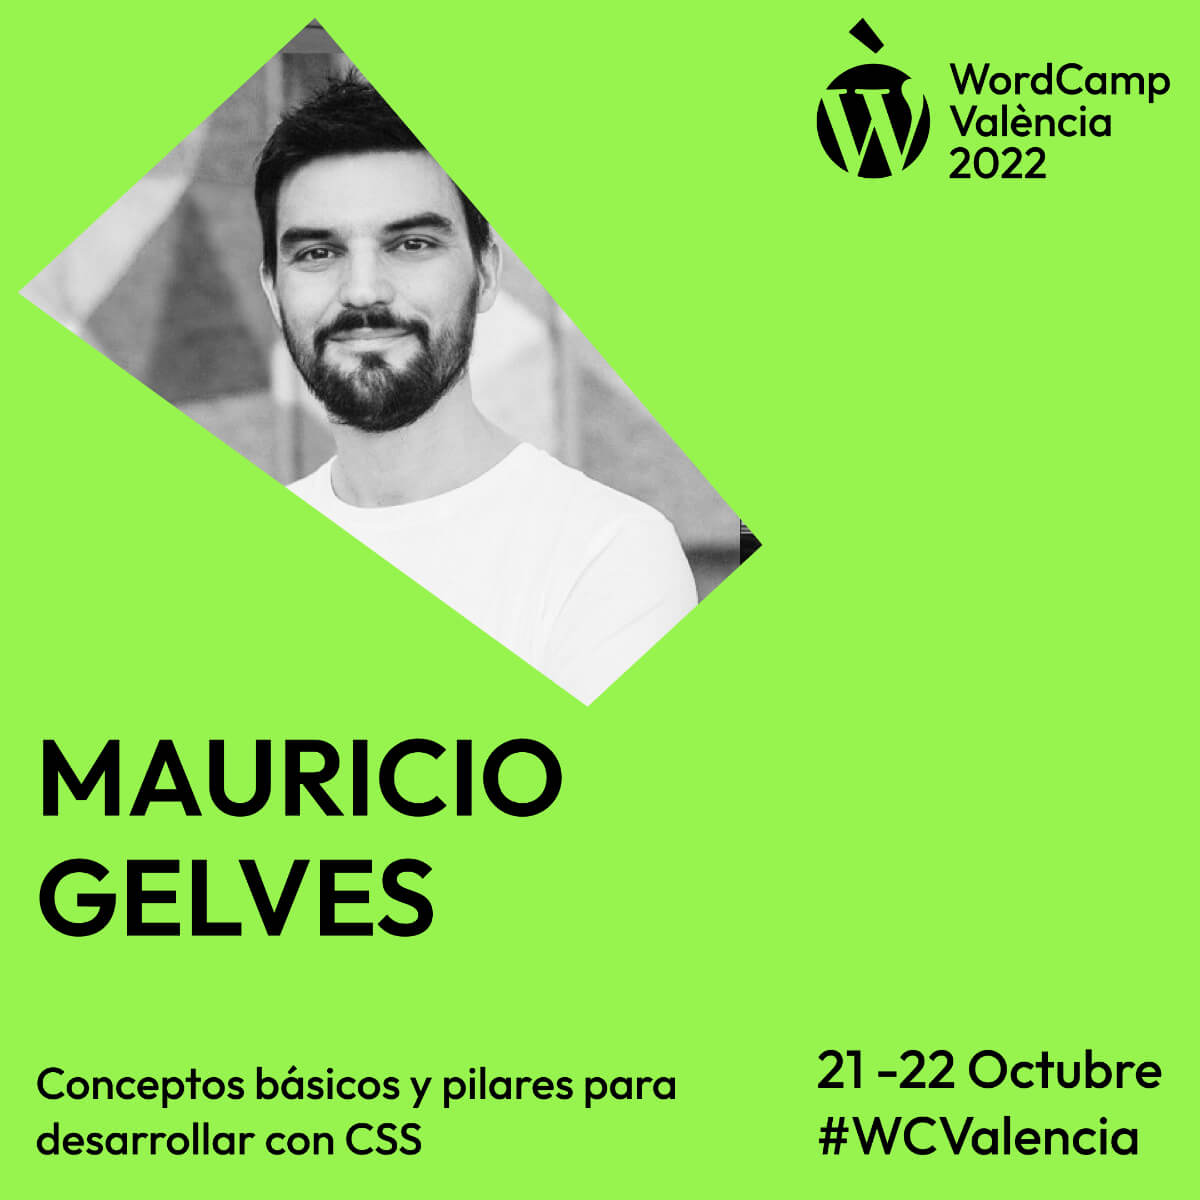 Mauricio Gelves WCVLC 2022